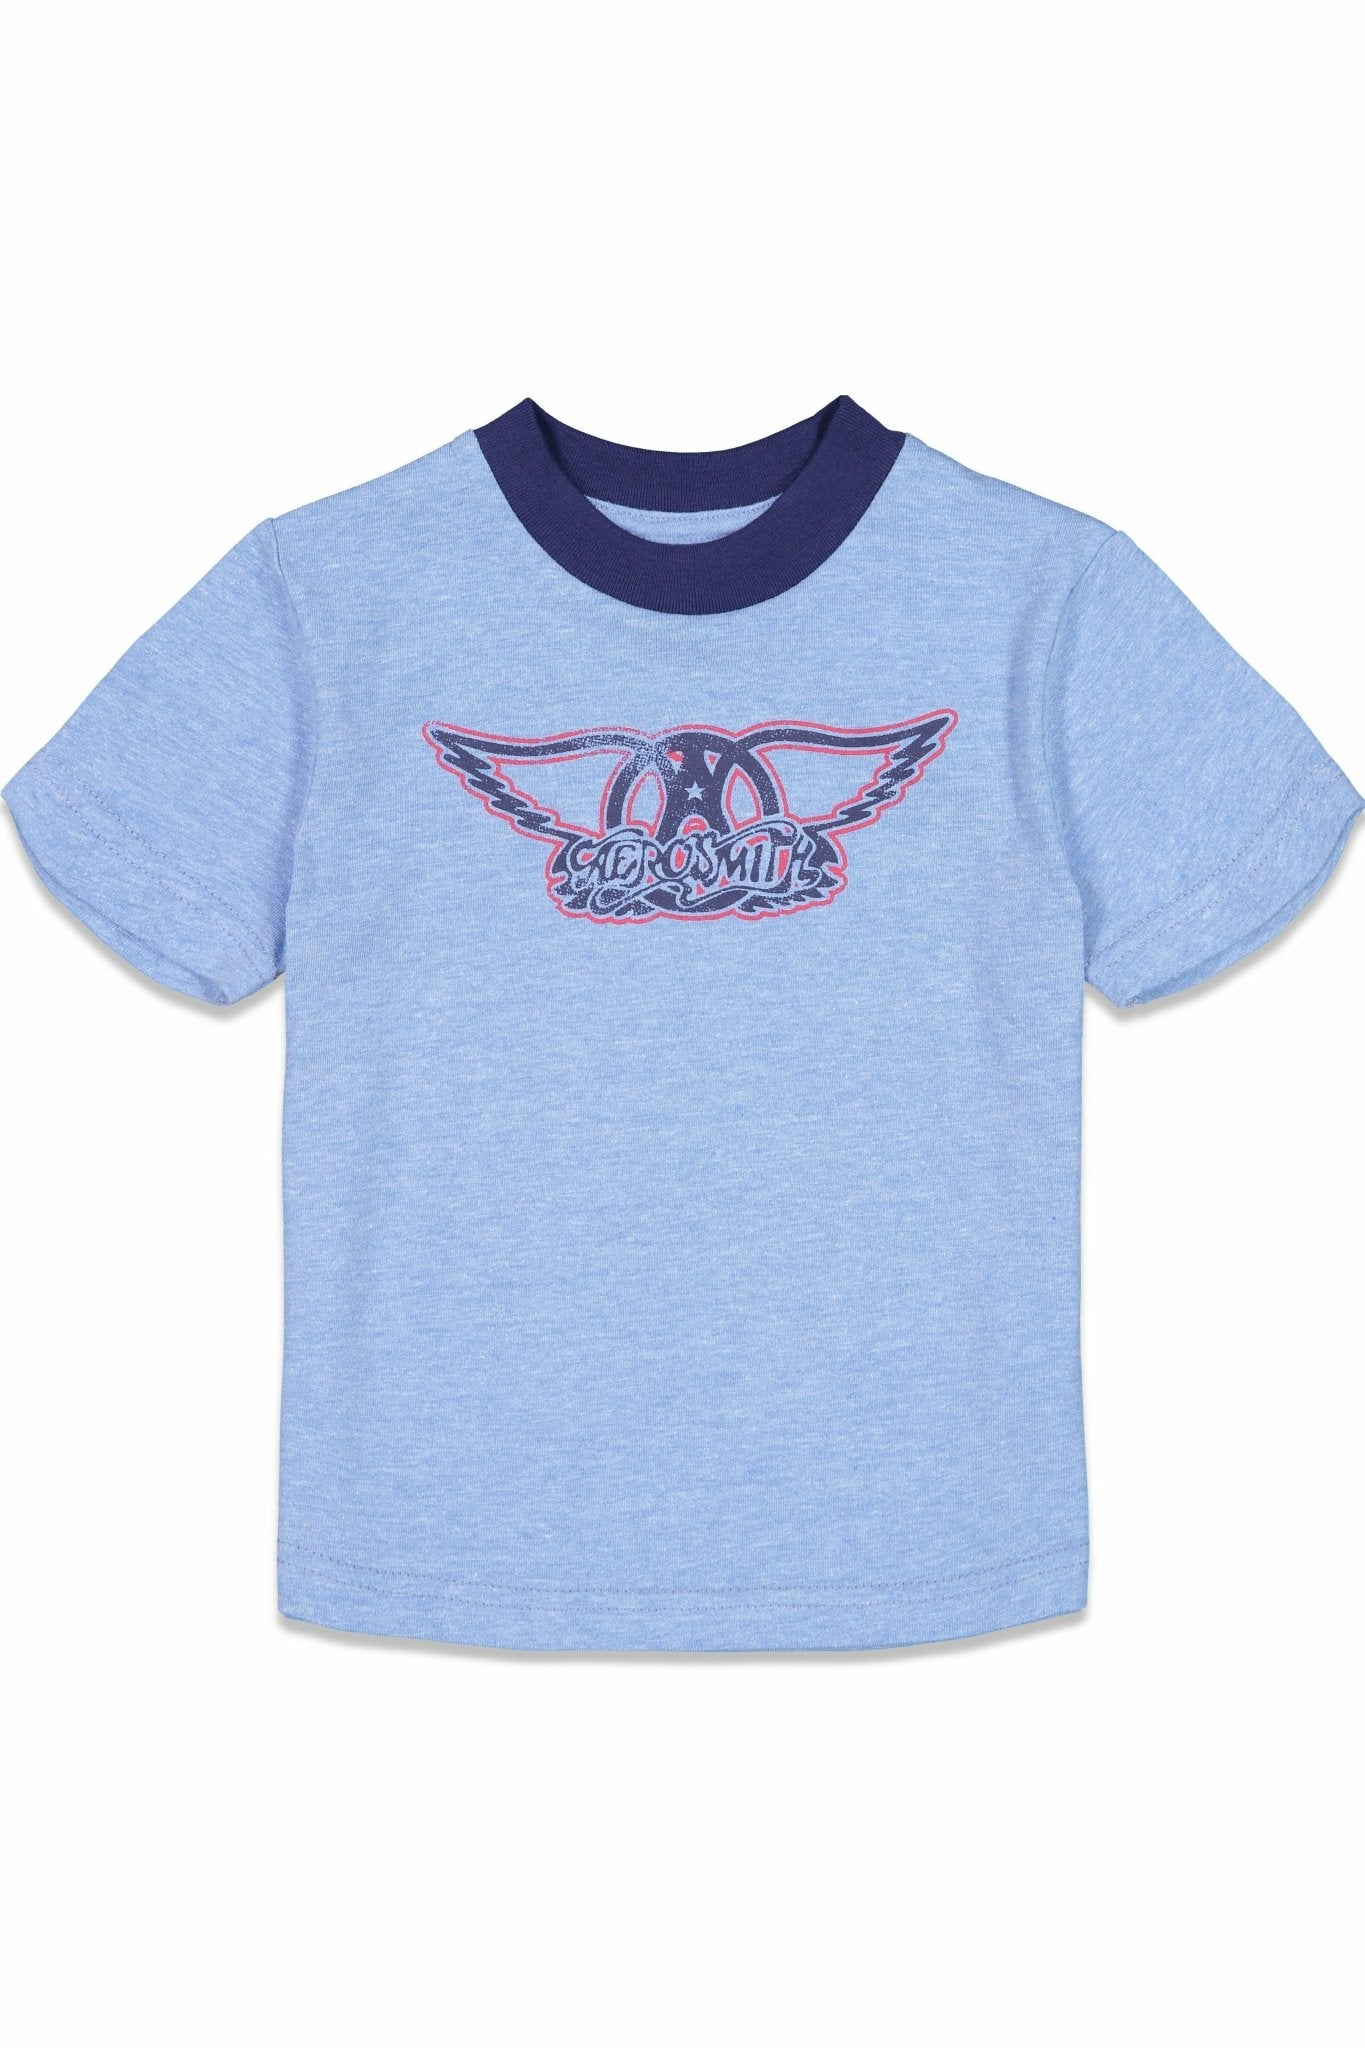 Aerosmith Graphic T-Shirt - imagikids